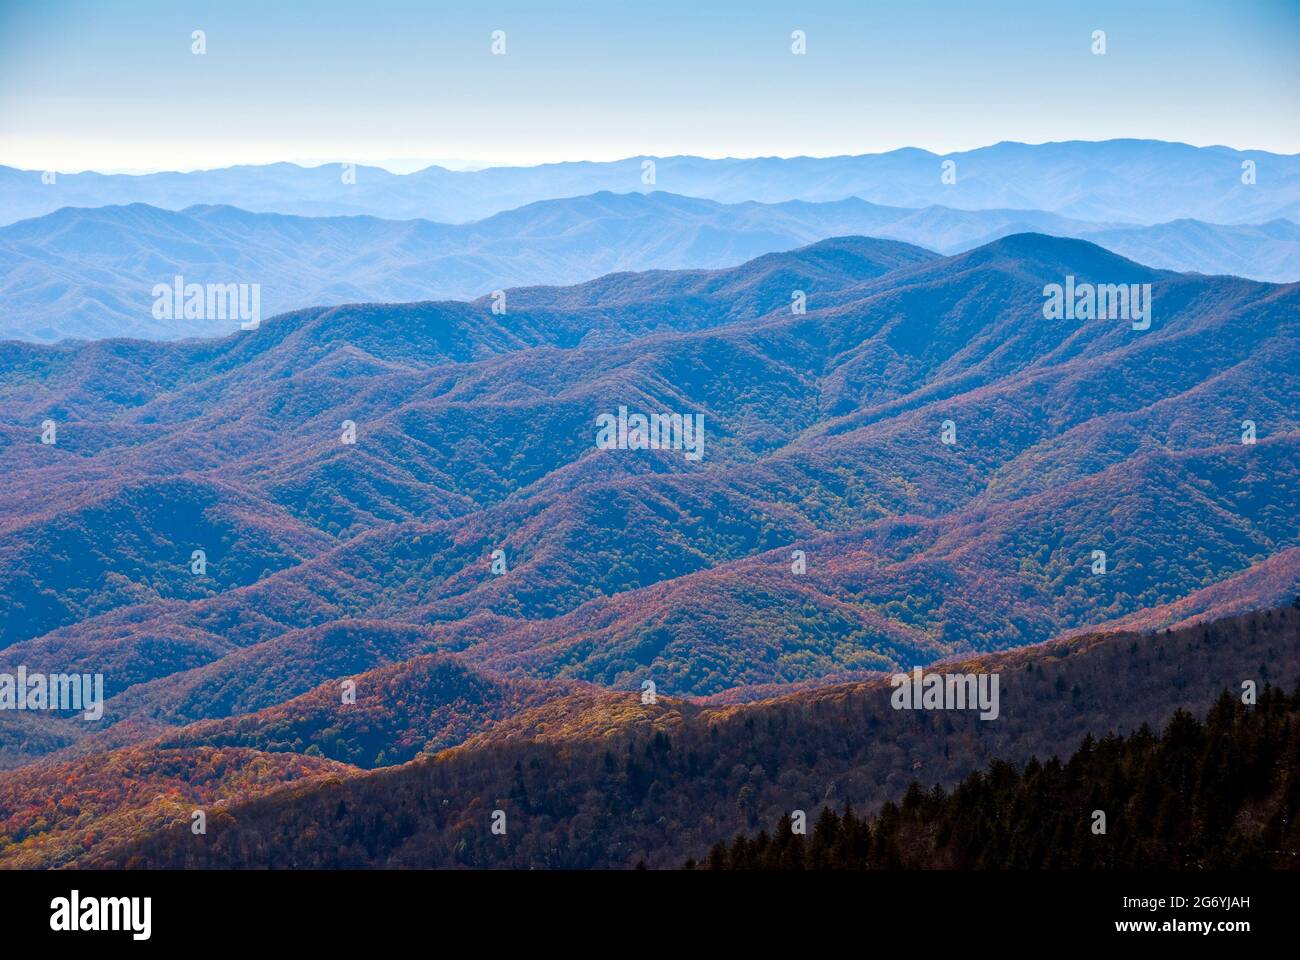 Cordilleras de montaña, árboles cubiertos de colores de follaje otoñal, Parque Nacional Smokey Mountain, Gatlinburg, Tennessee Foto de stock